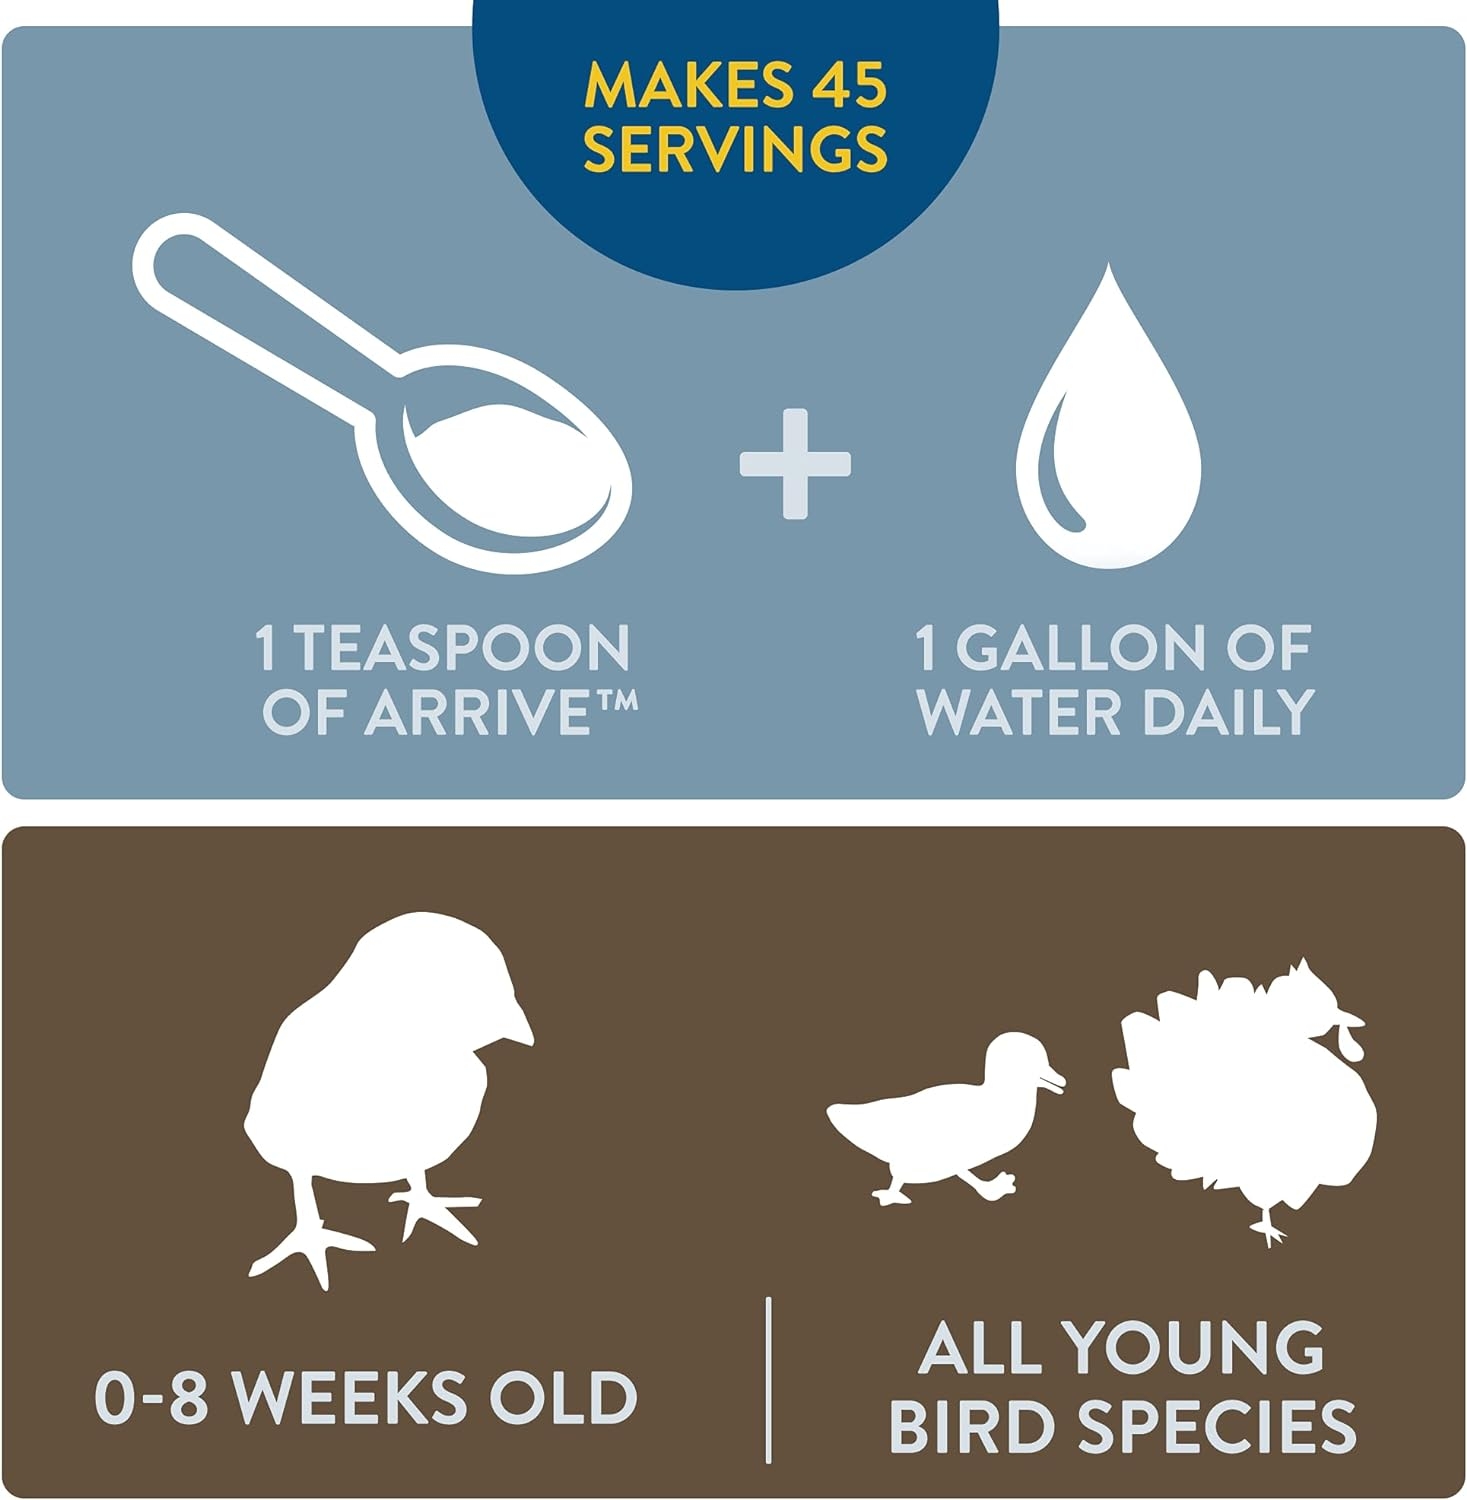 FlockLeader Arrive, Prebiotic Probiotic Supplement for Young Chickens, 0-8 Weeks, 8 OZ